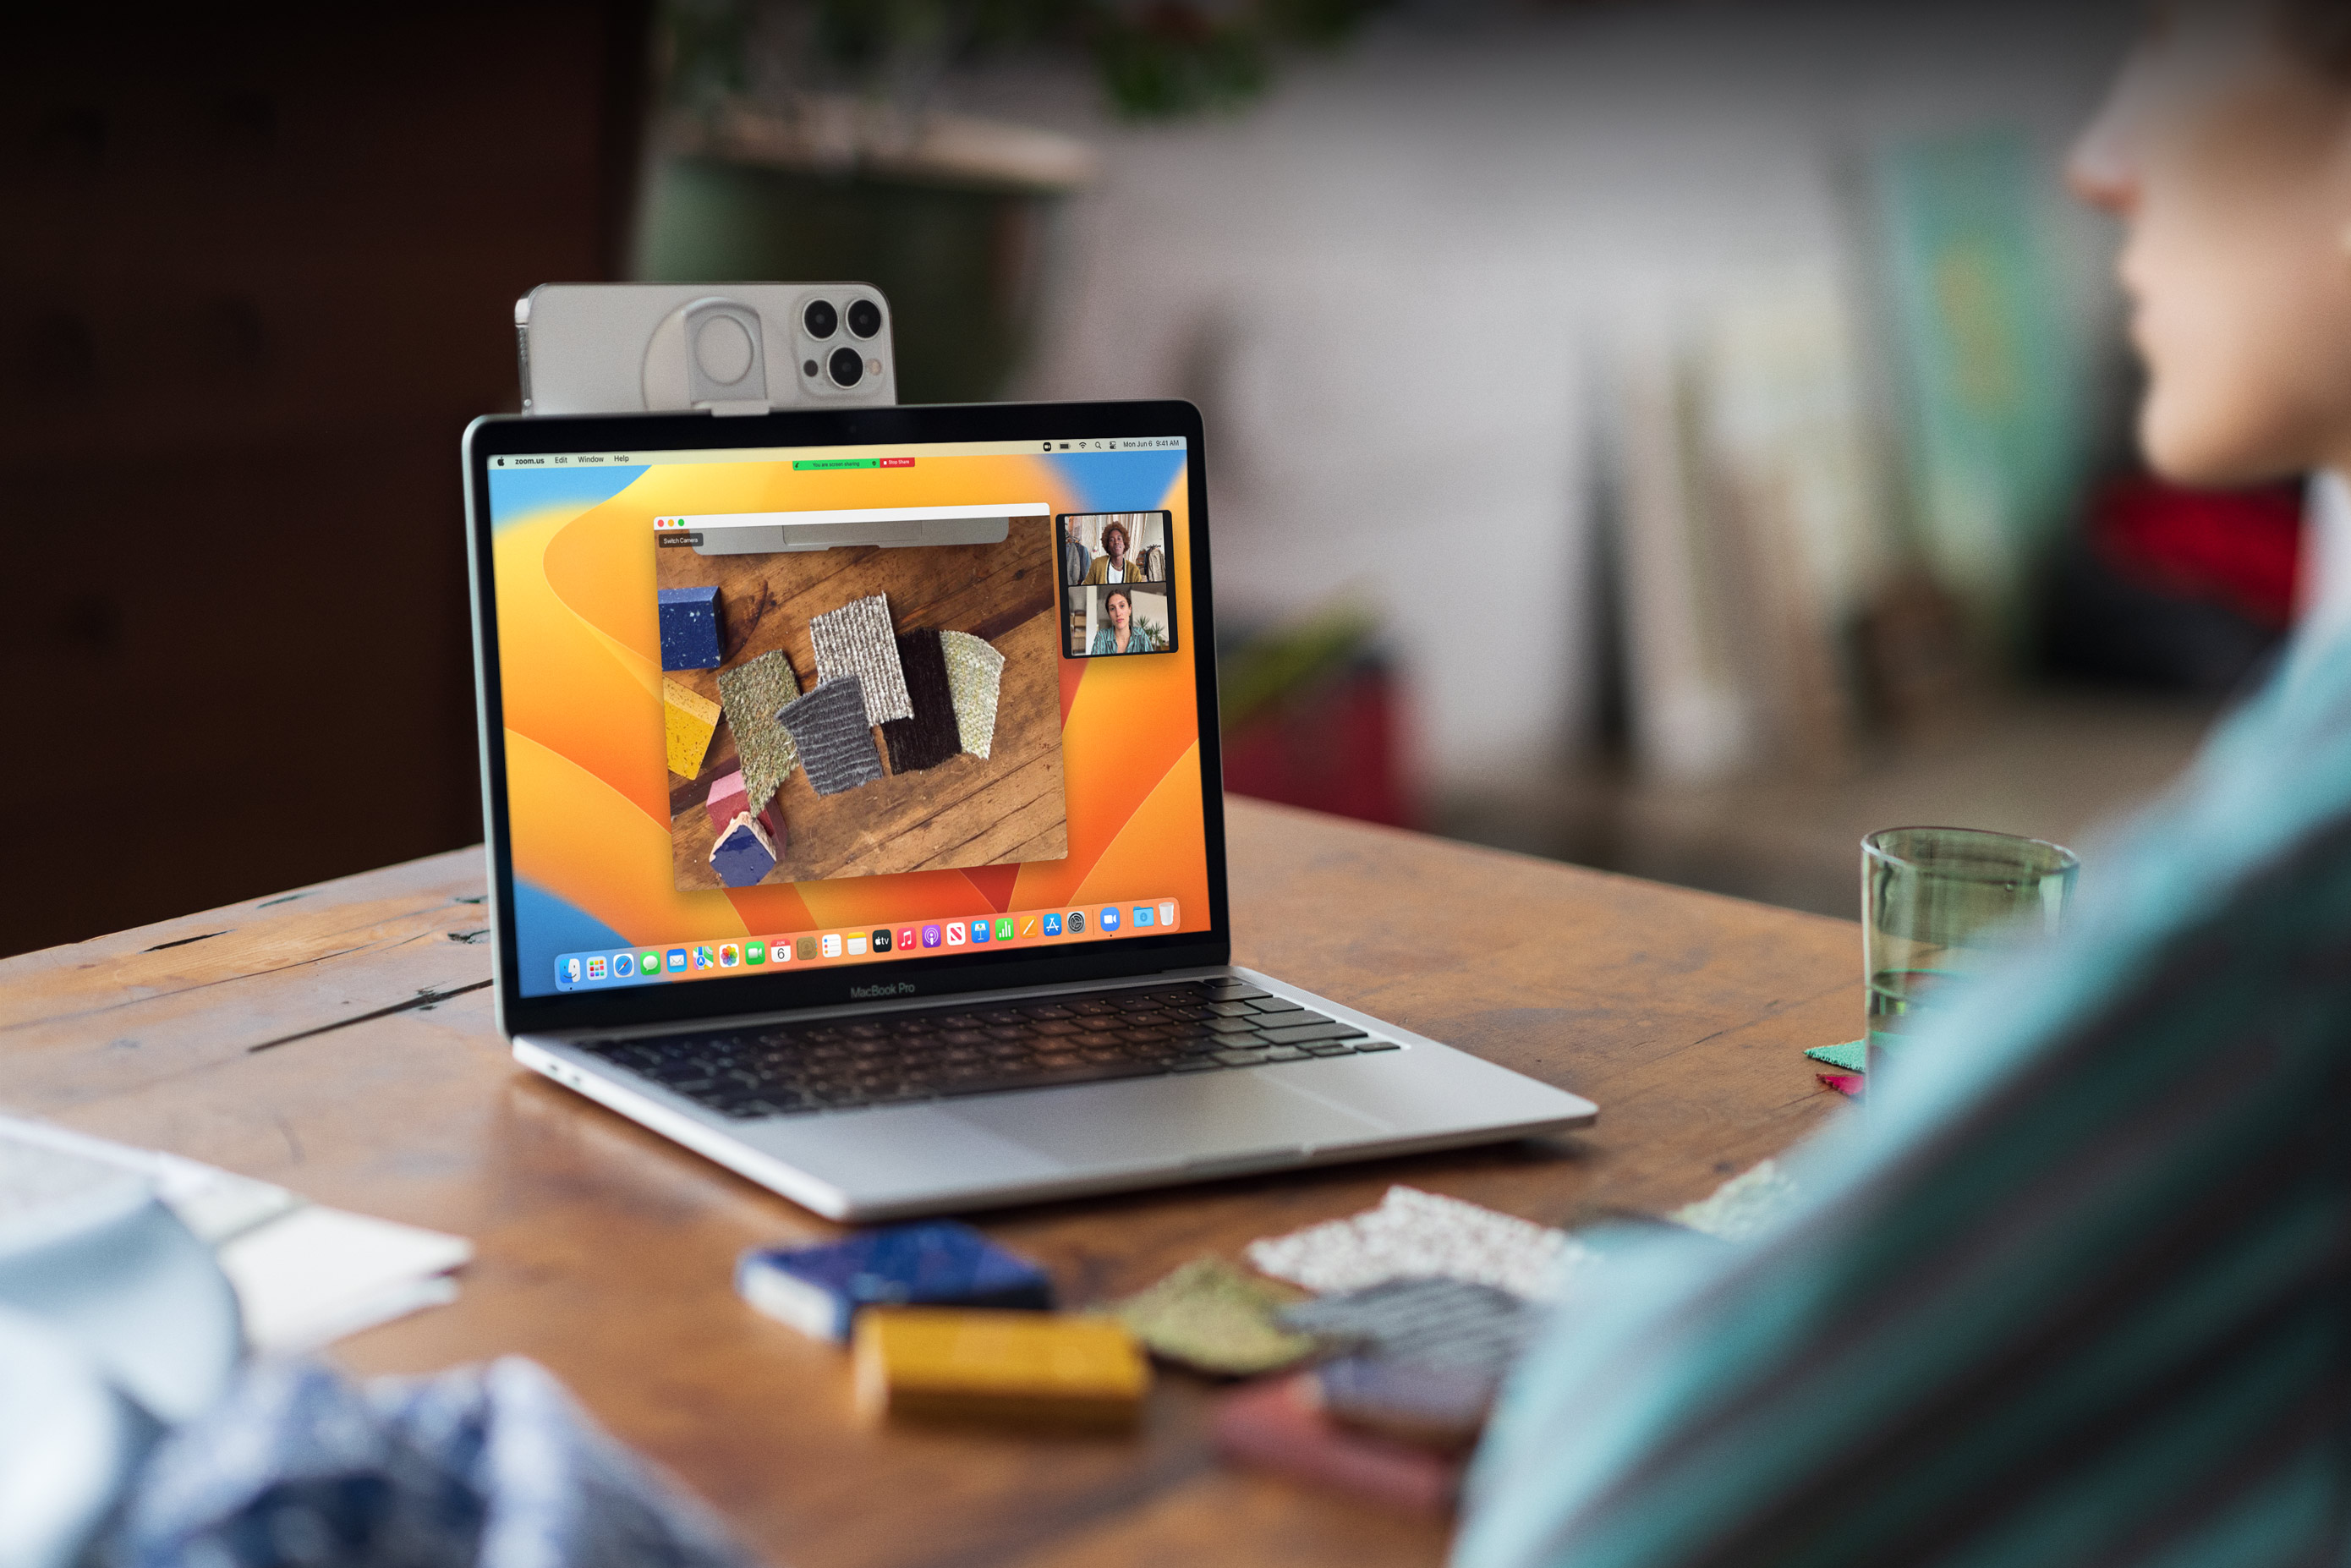 iPhone as a webcam for Mac – a really great idea, Apple